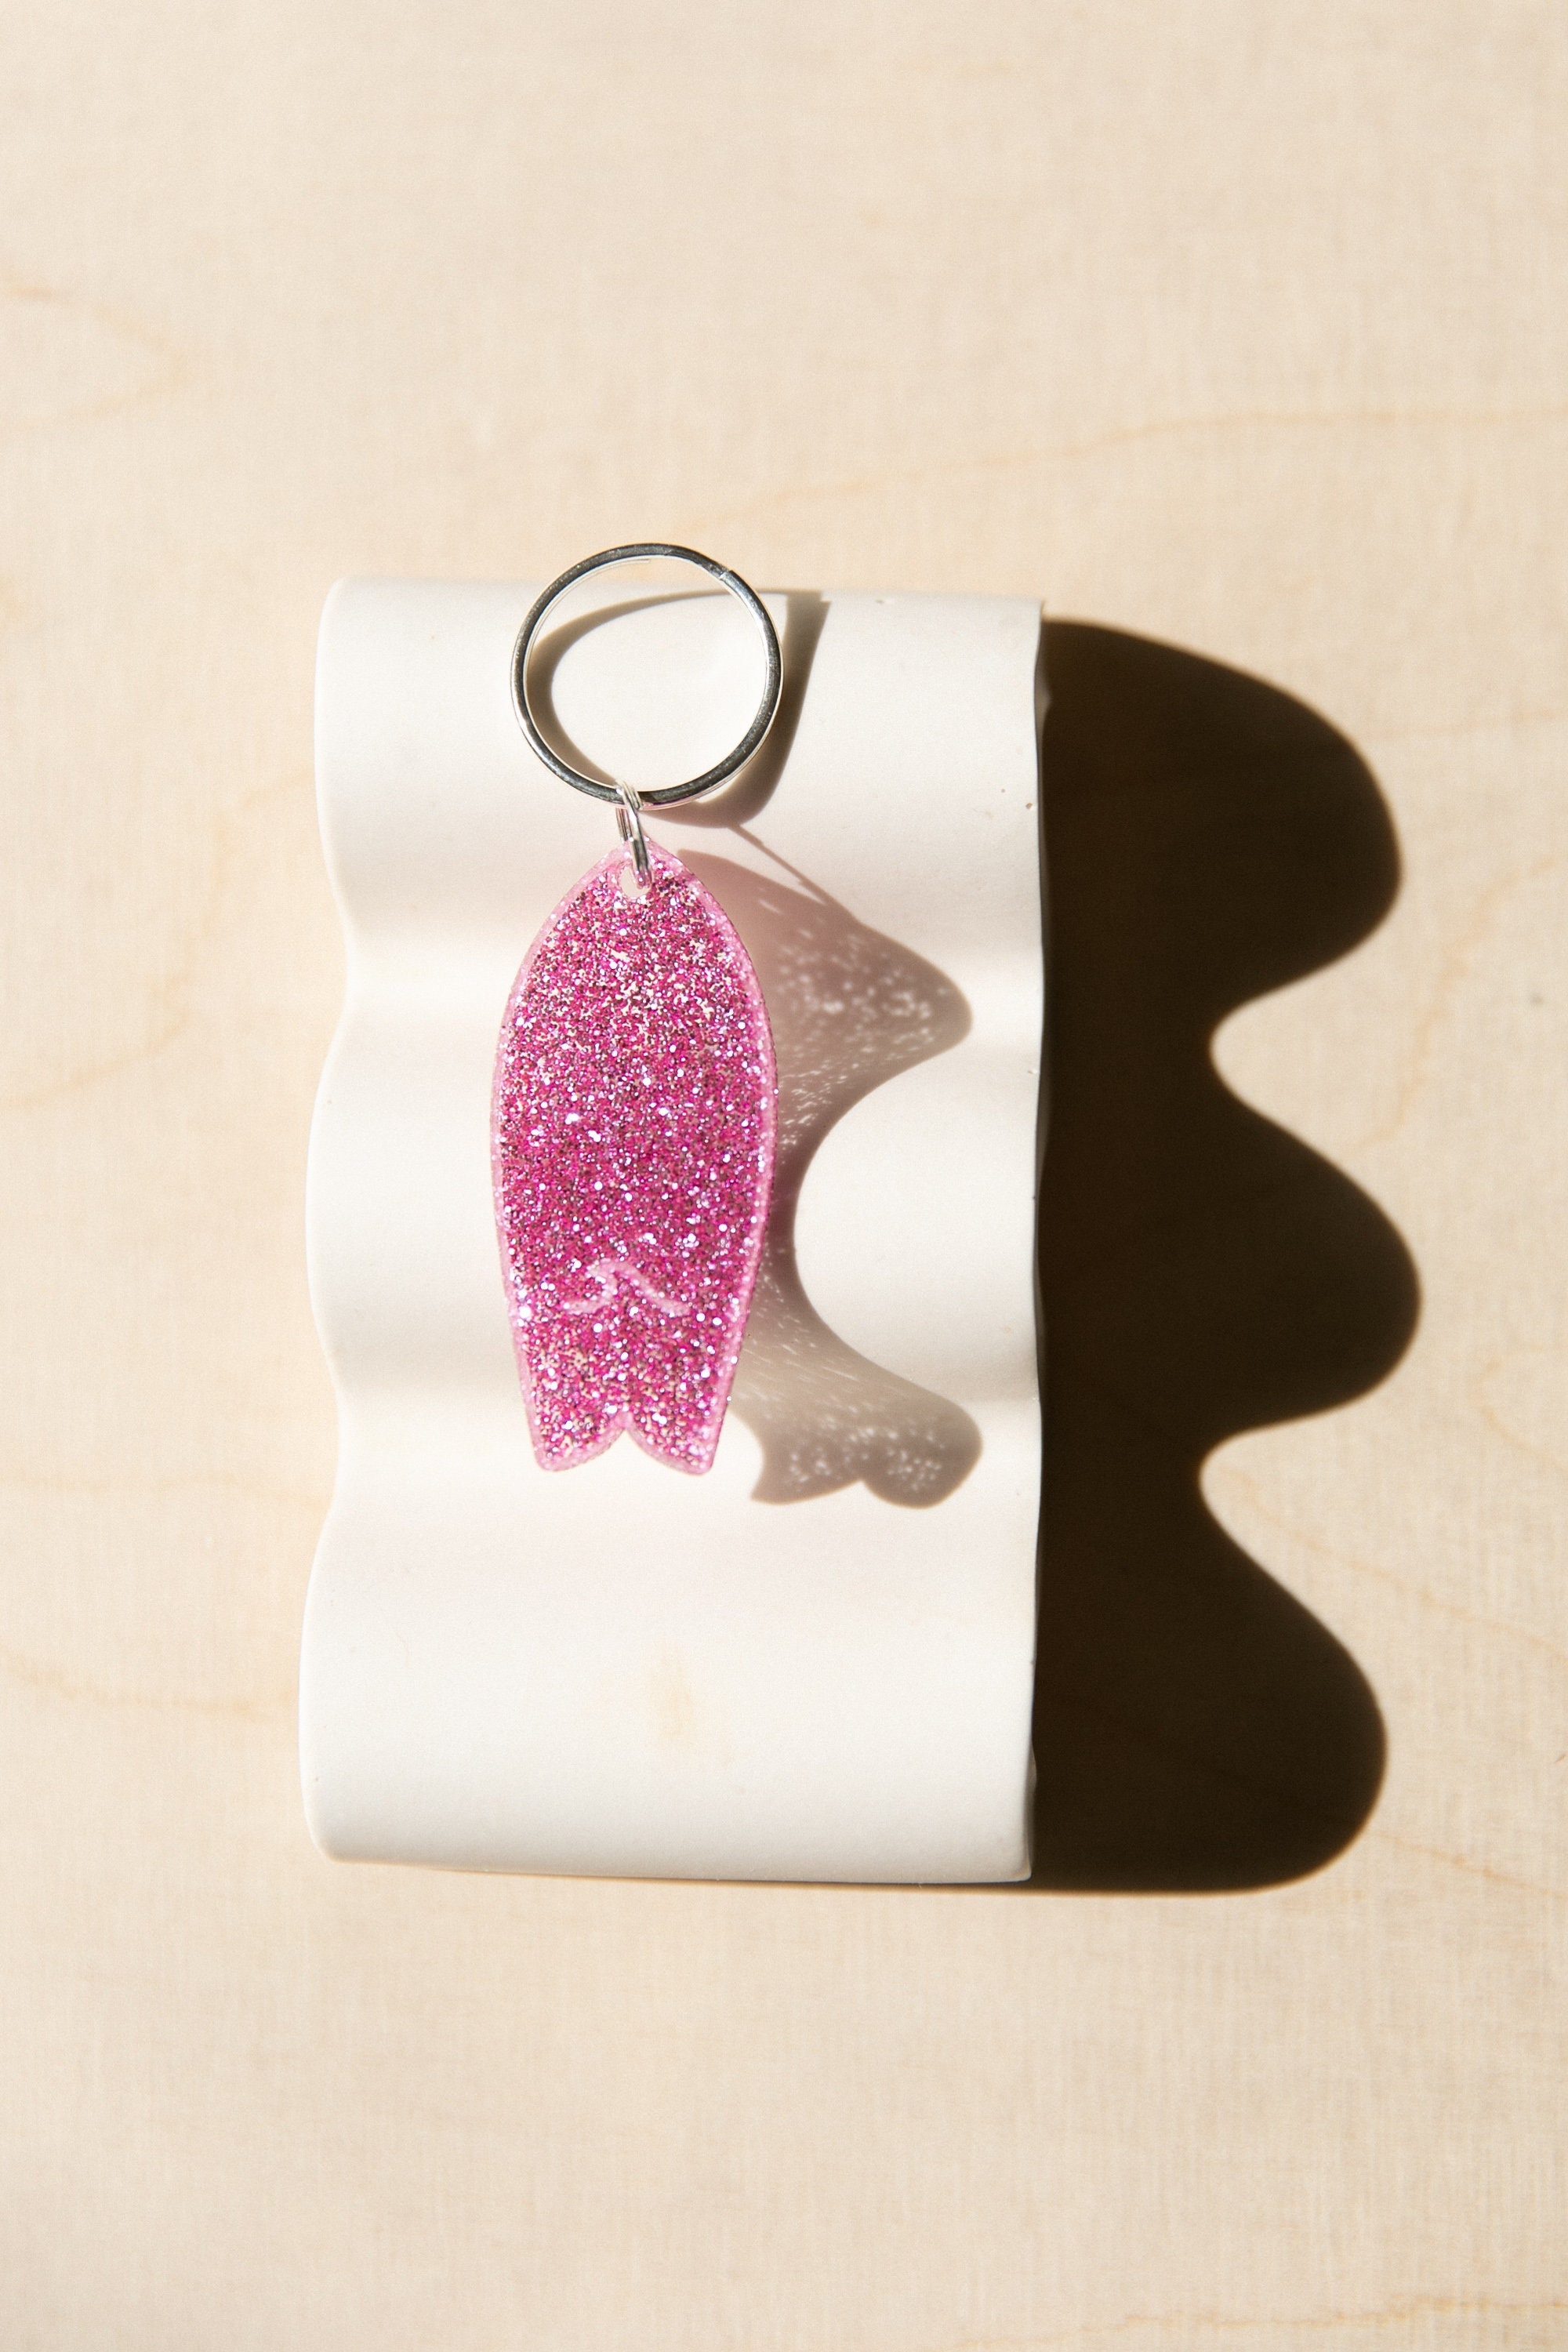 Goatskin Zipper Key Case - Cherry Blossom Pink Can Hold Keys and Change【LBT  Pro】 - Shop LBT Pro Keychains - Pinkoi